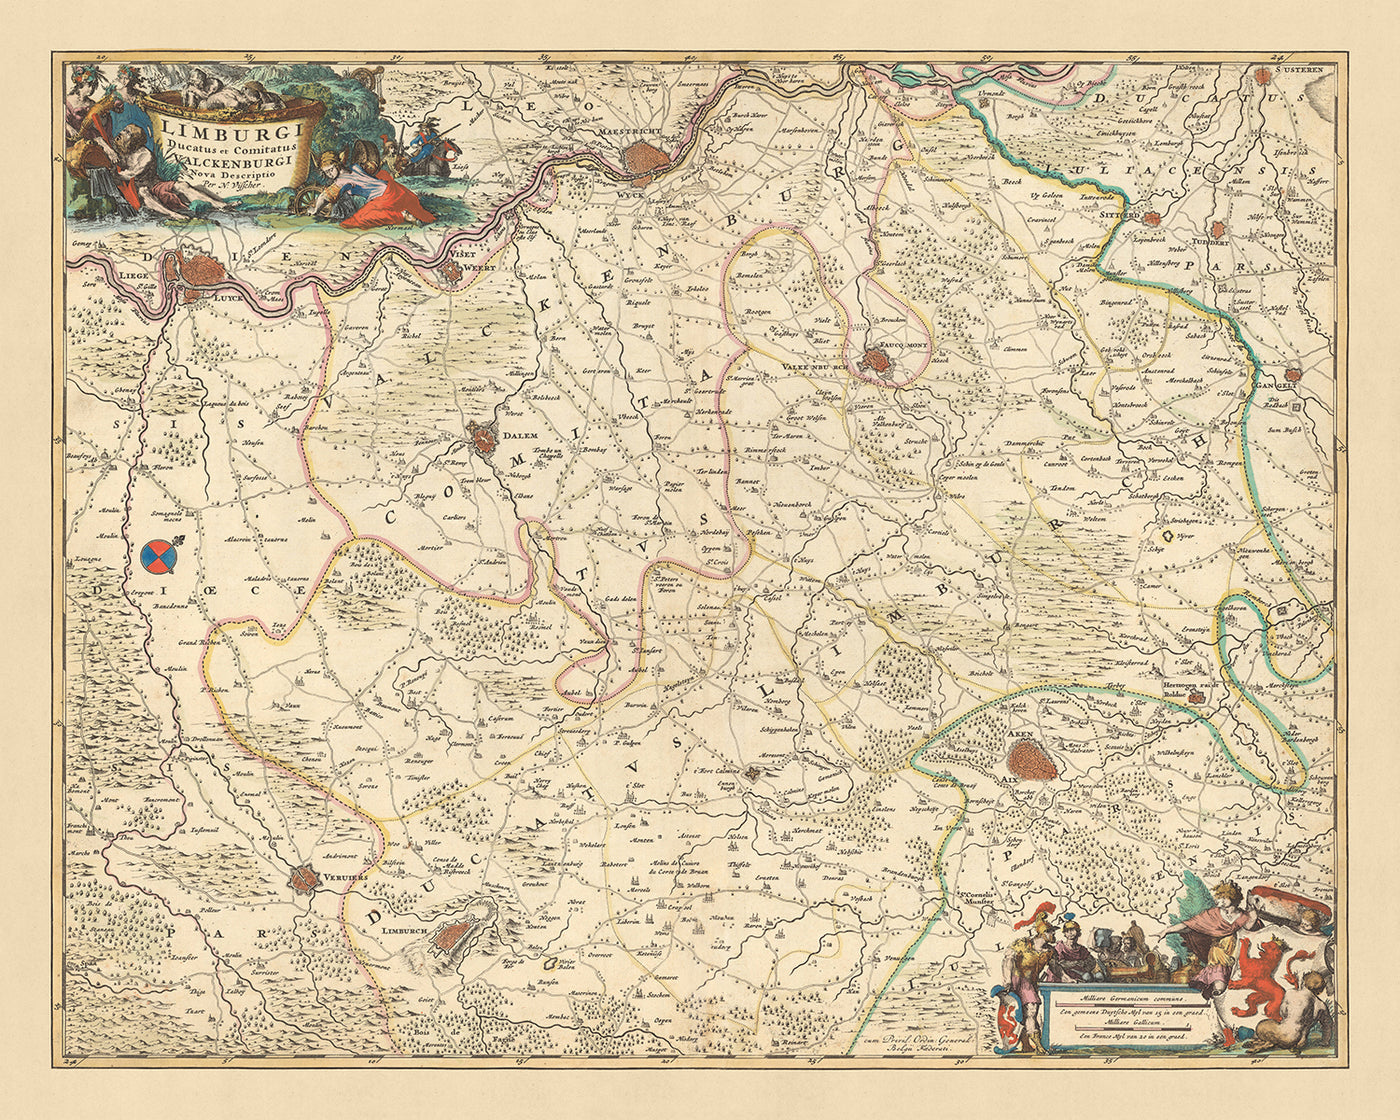 Old Map of Duchy of Limburg & County of Valkenburg by Visscher, 1690: Liège, Aachen, Maastricht, Verviers, Heerlen